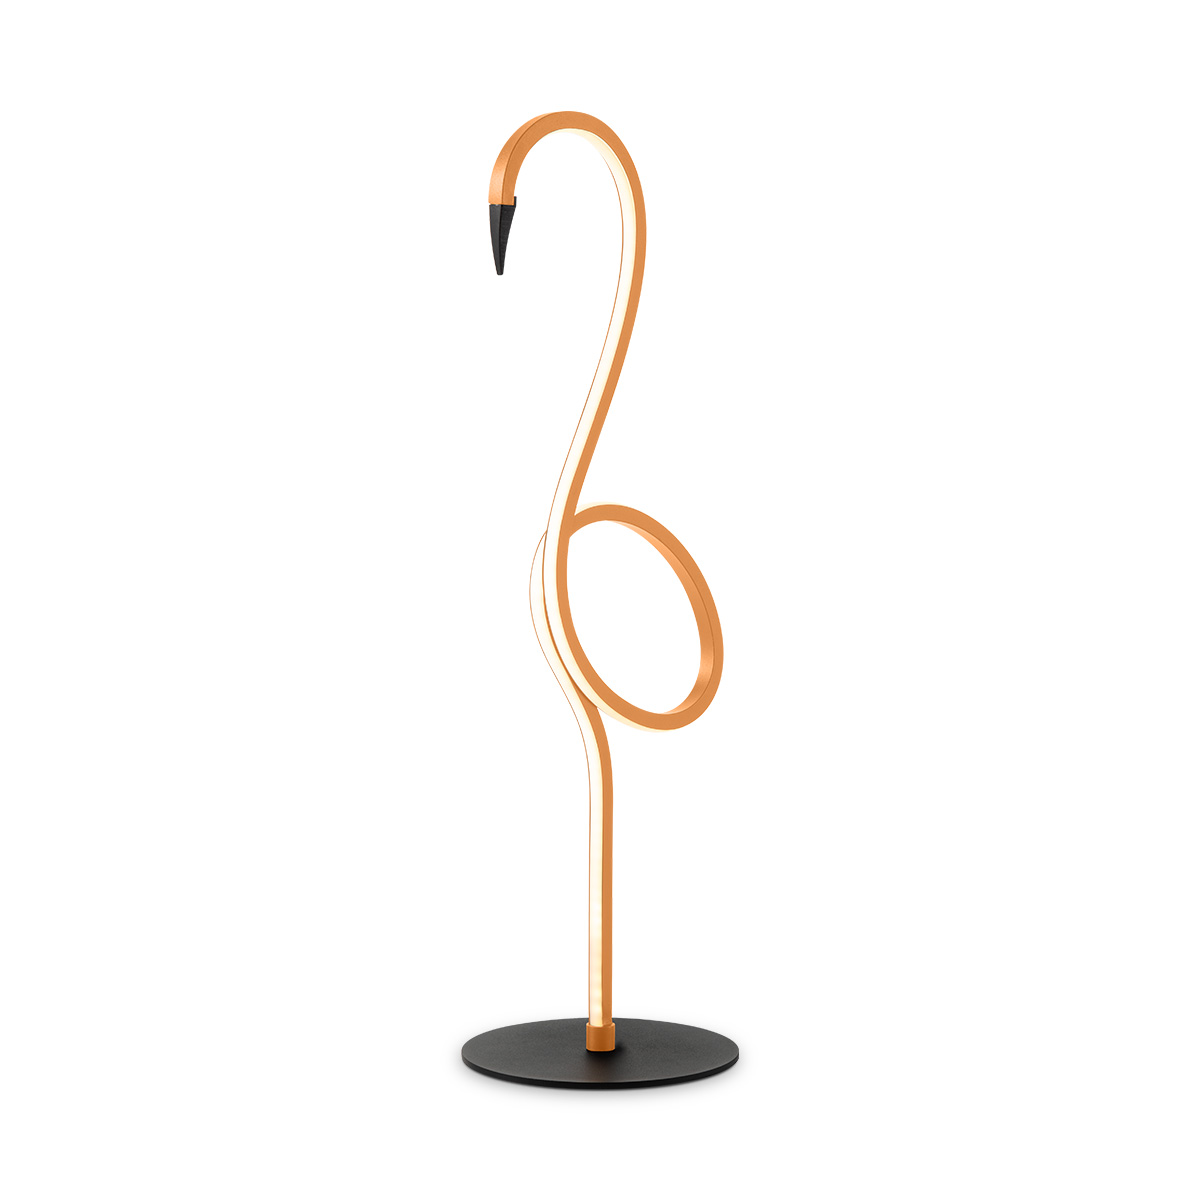 Tangla lighting - TLT7611-01AOG - LED Table lamp - metal - orange